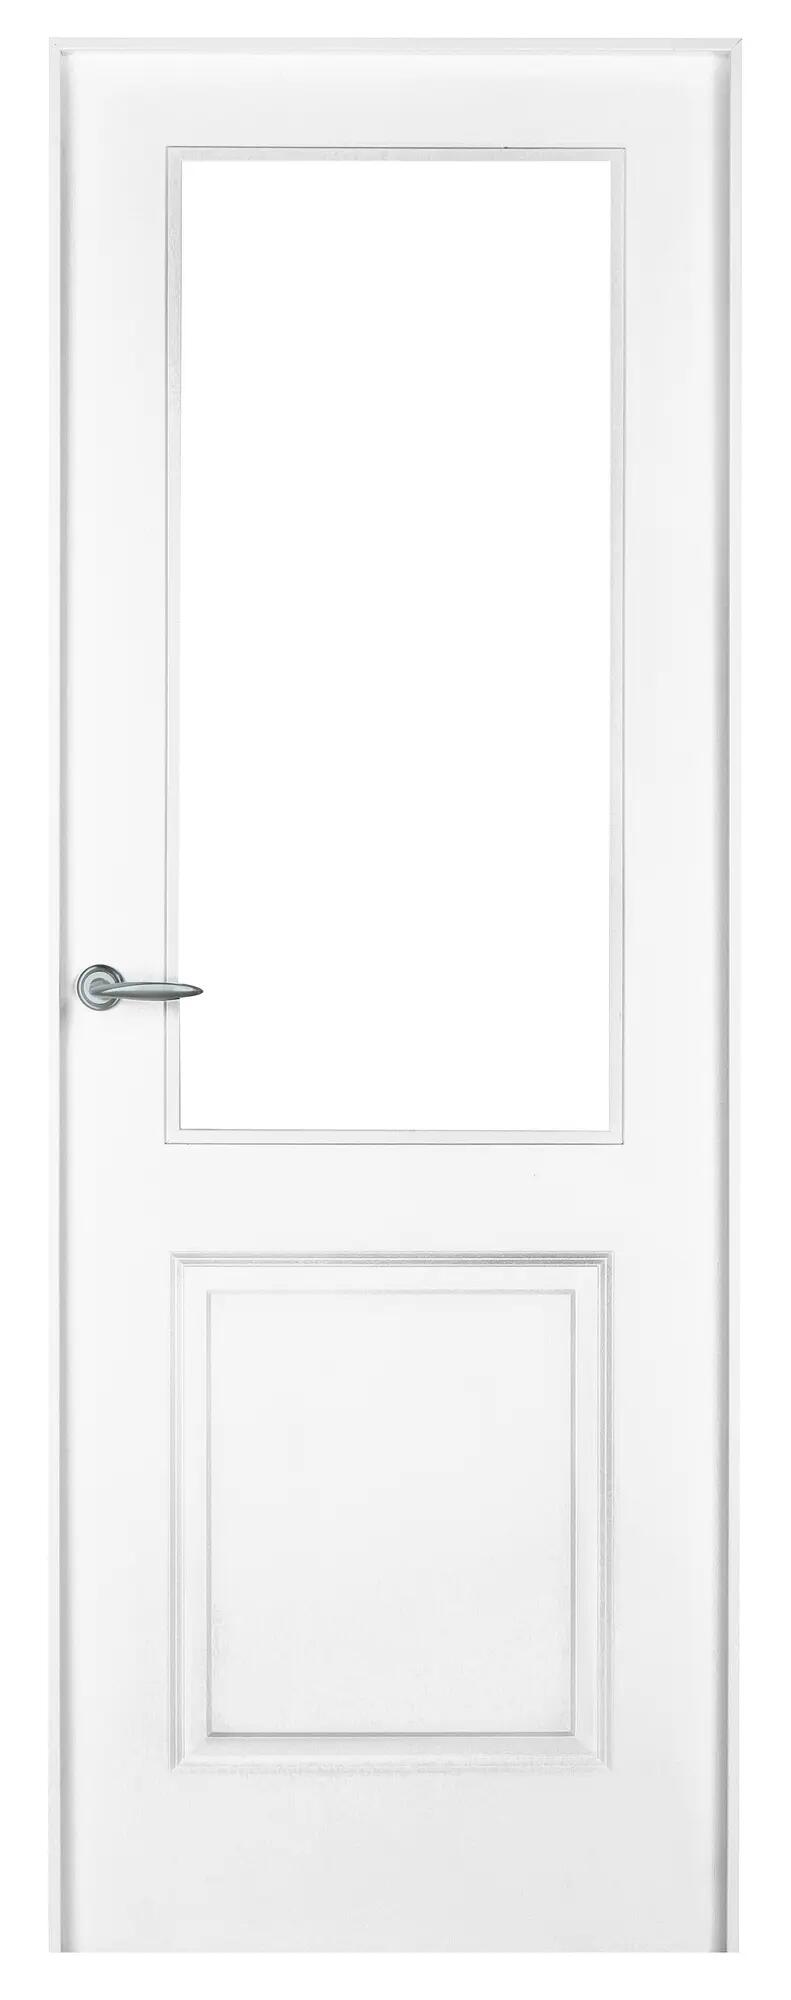 Puerta bonn blanco apertura izquierda con cristal 82.5cm